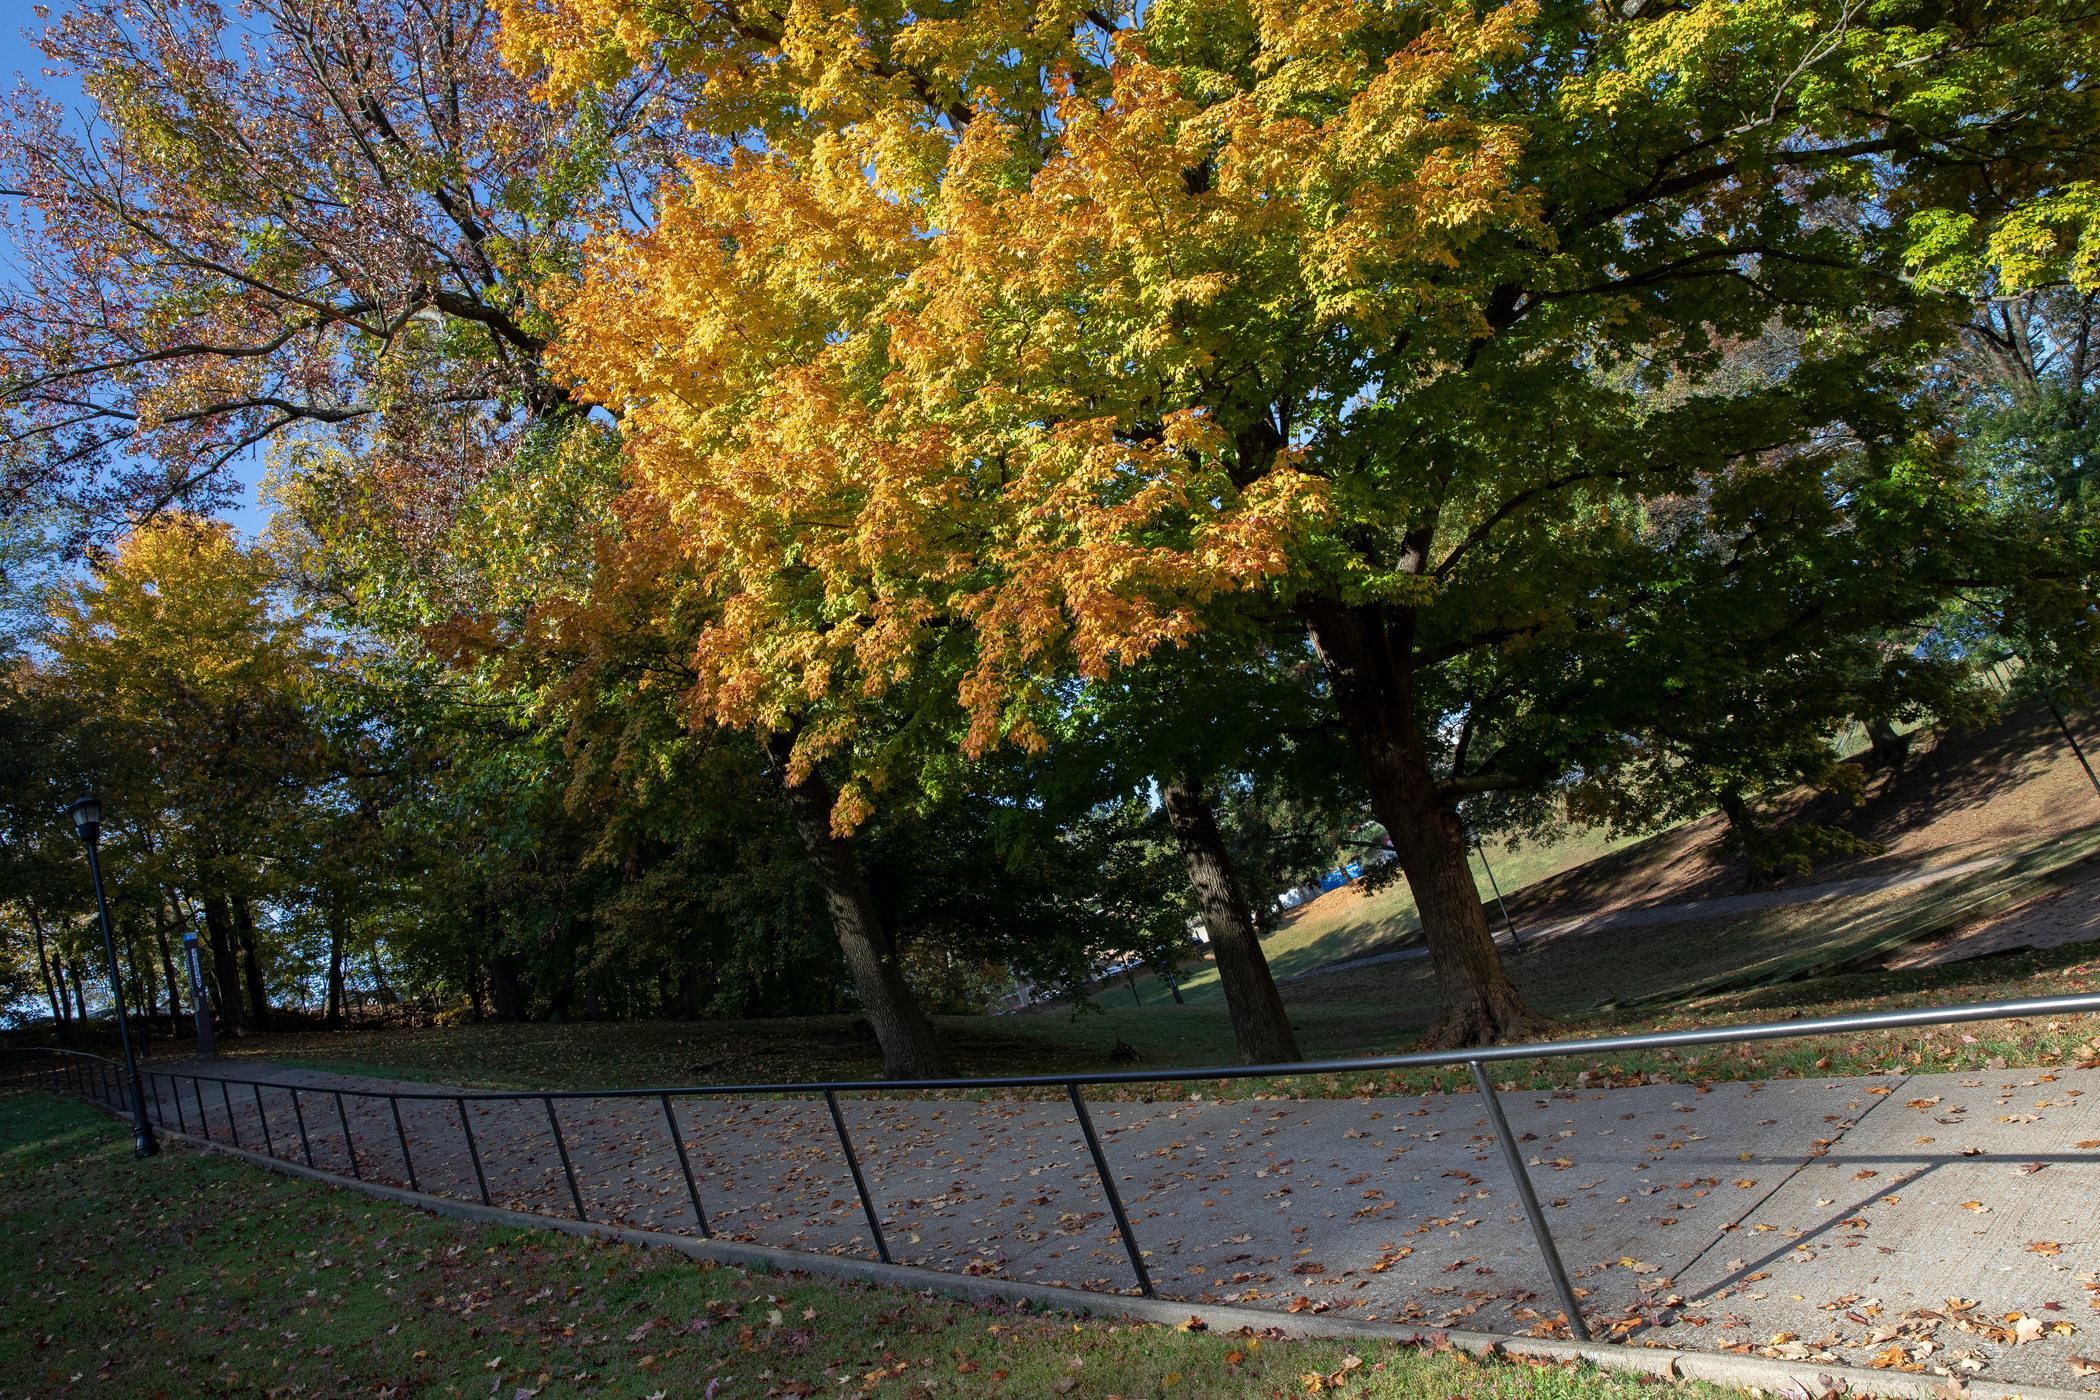 Cardiac Hill in the fall season